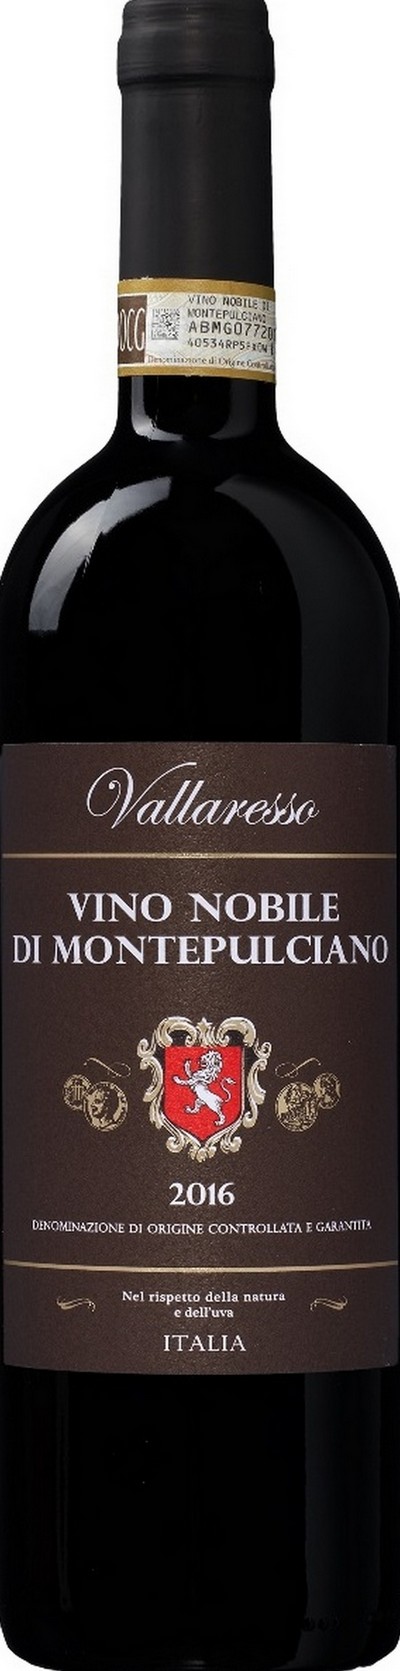 vallaresso-vino-nobile-di-montepulciano-docg-2016